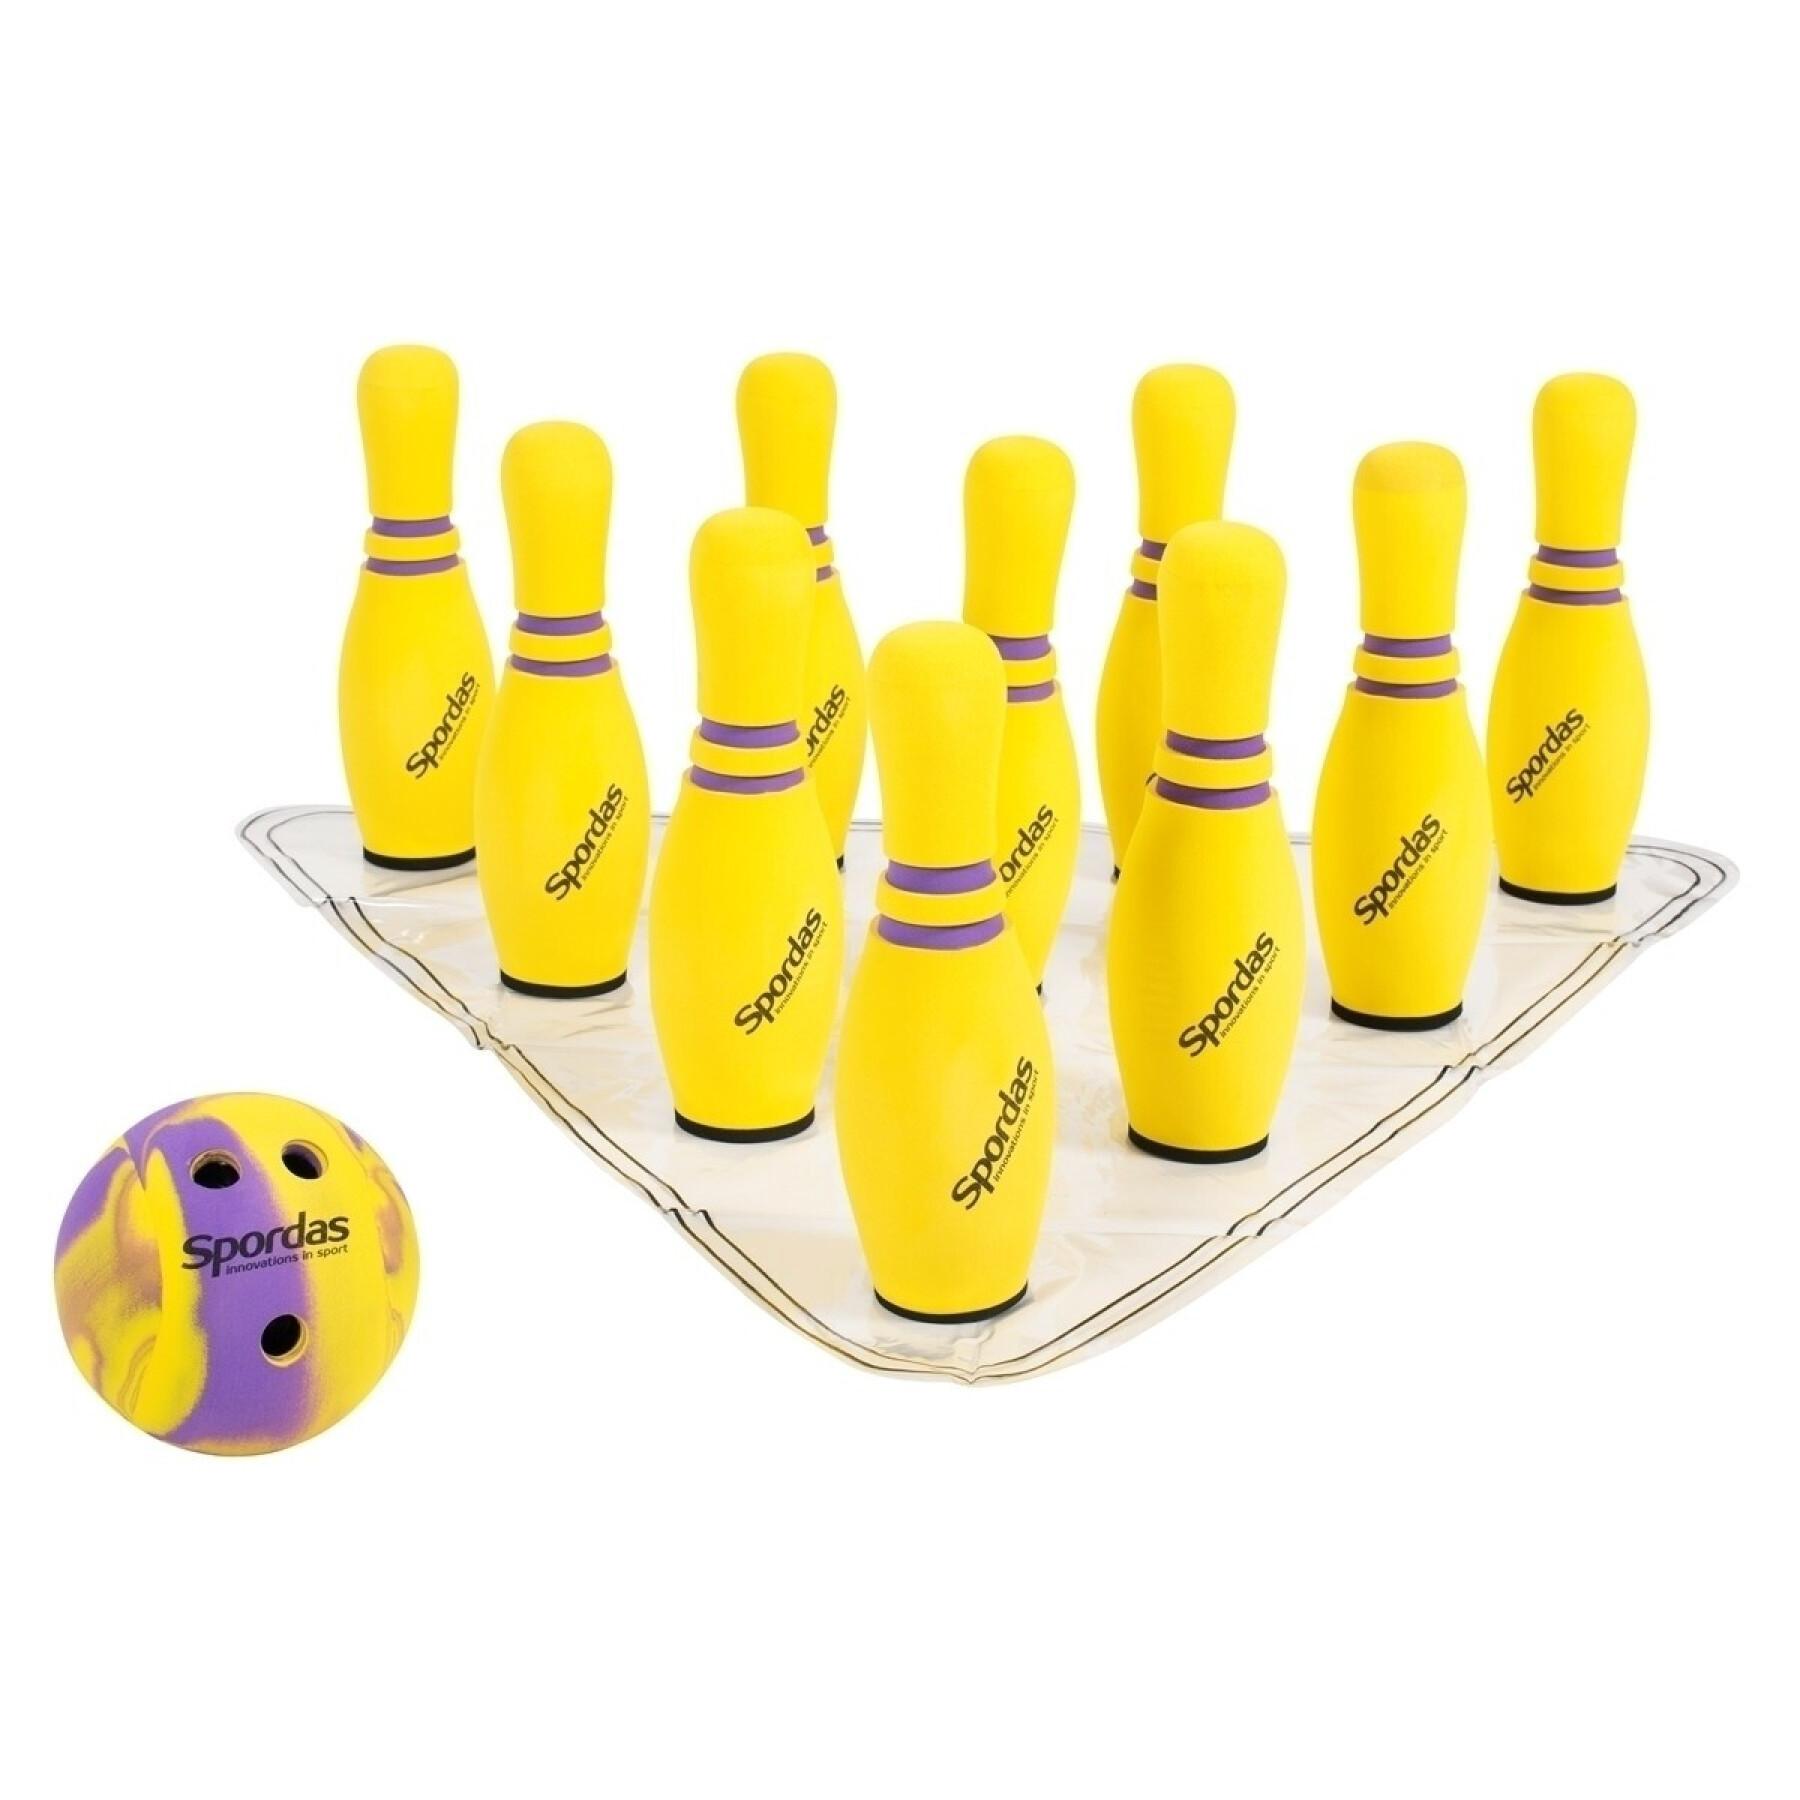 Foam bowling game Spordas Super